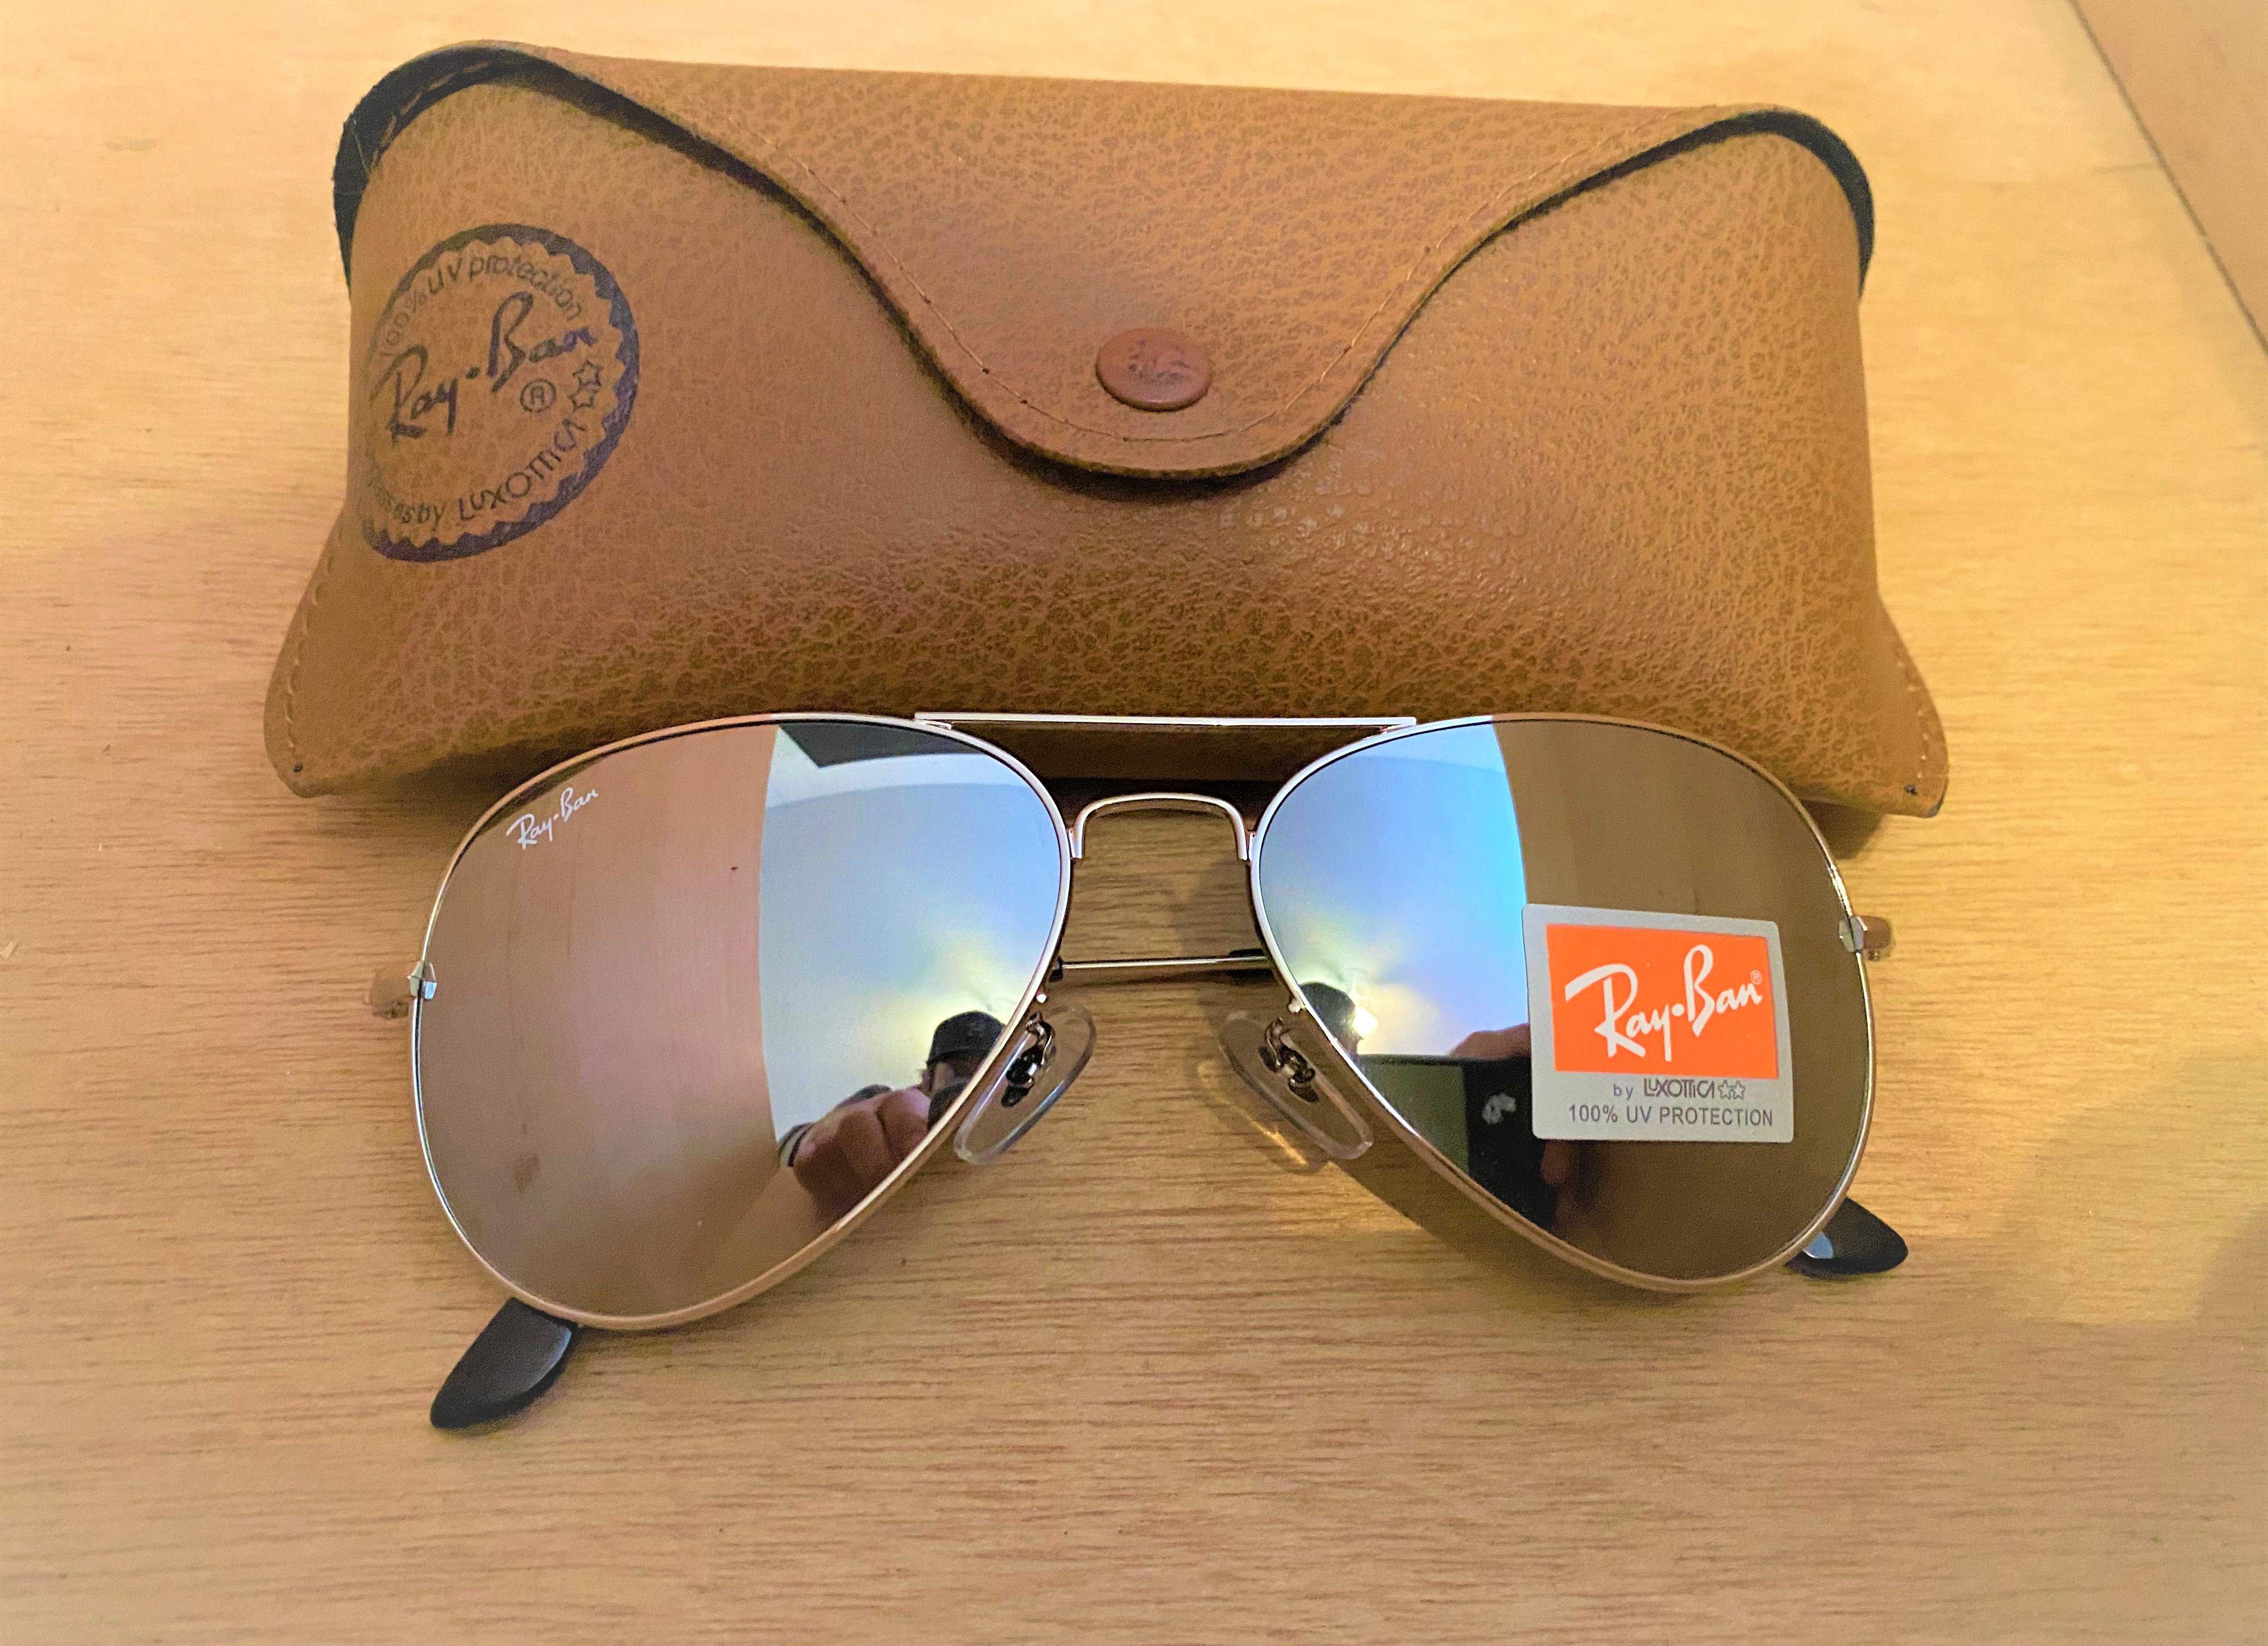 Brand New Authentic RayBan Aviator Sunglasses 100% UV Protectant